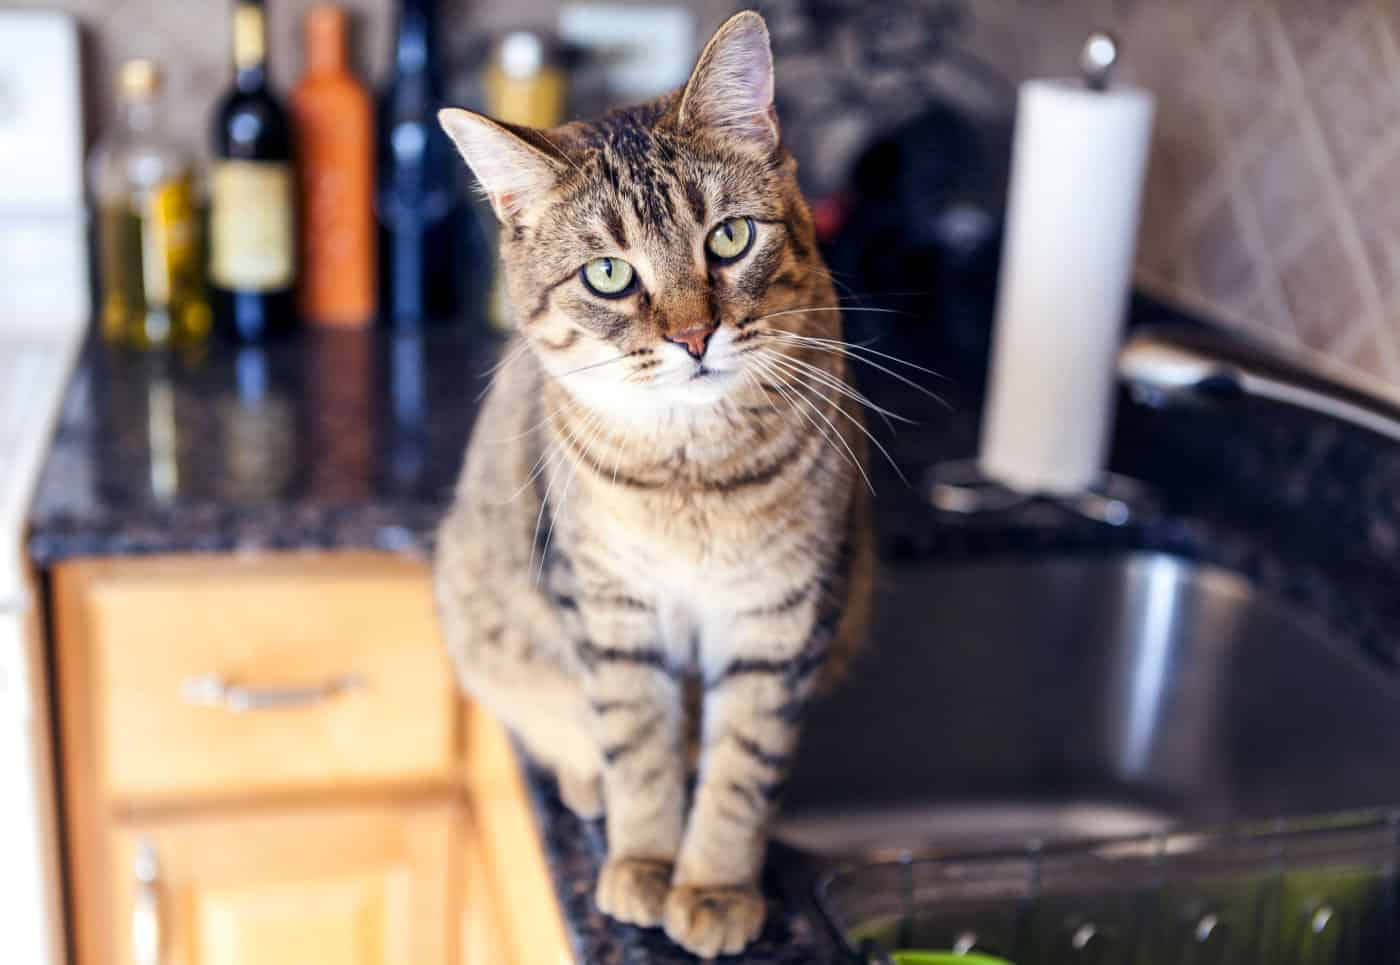 Cat on kitchen countertop